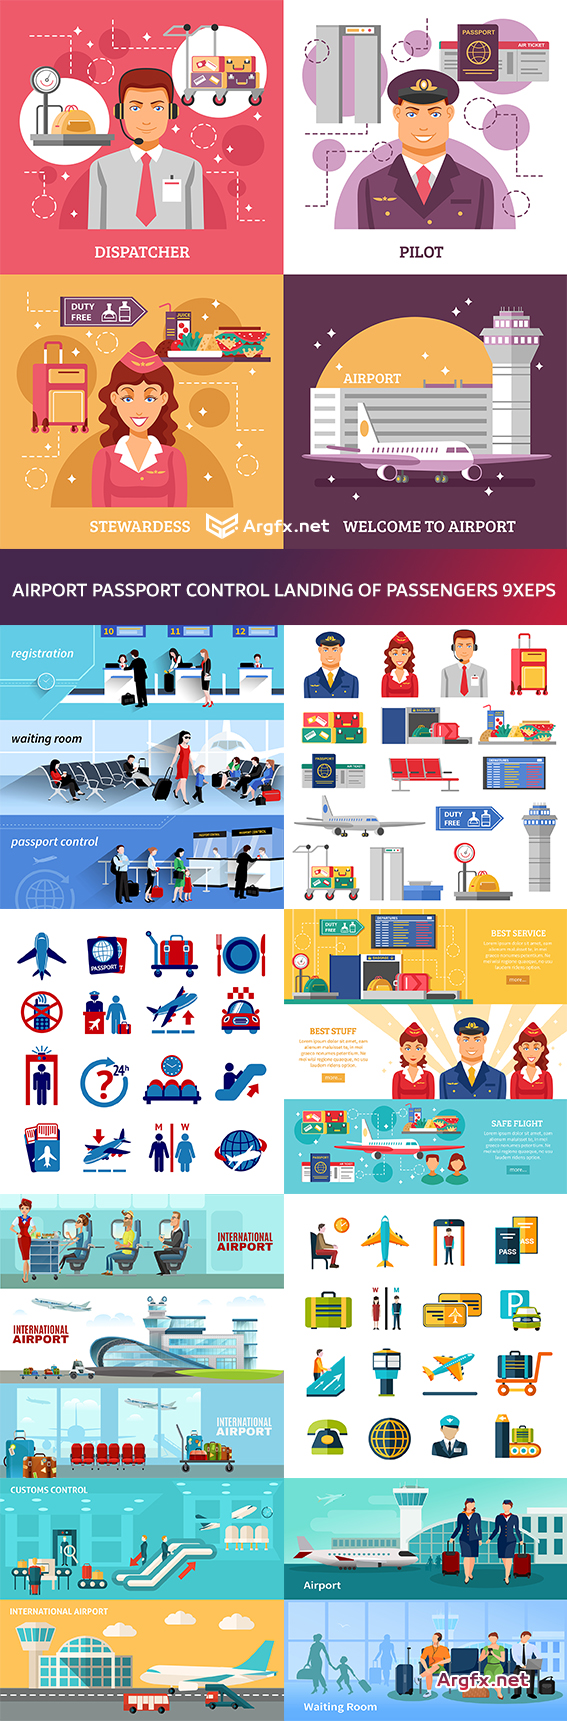 Airport Passport Control Landing of Passengers 9xEPS